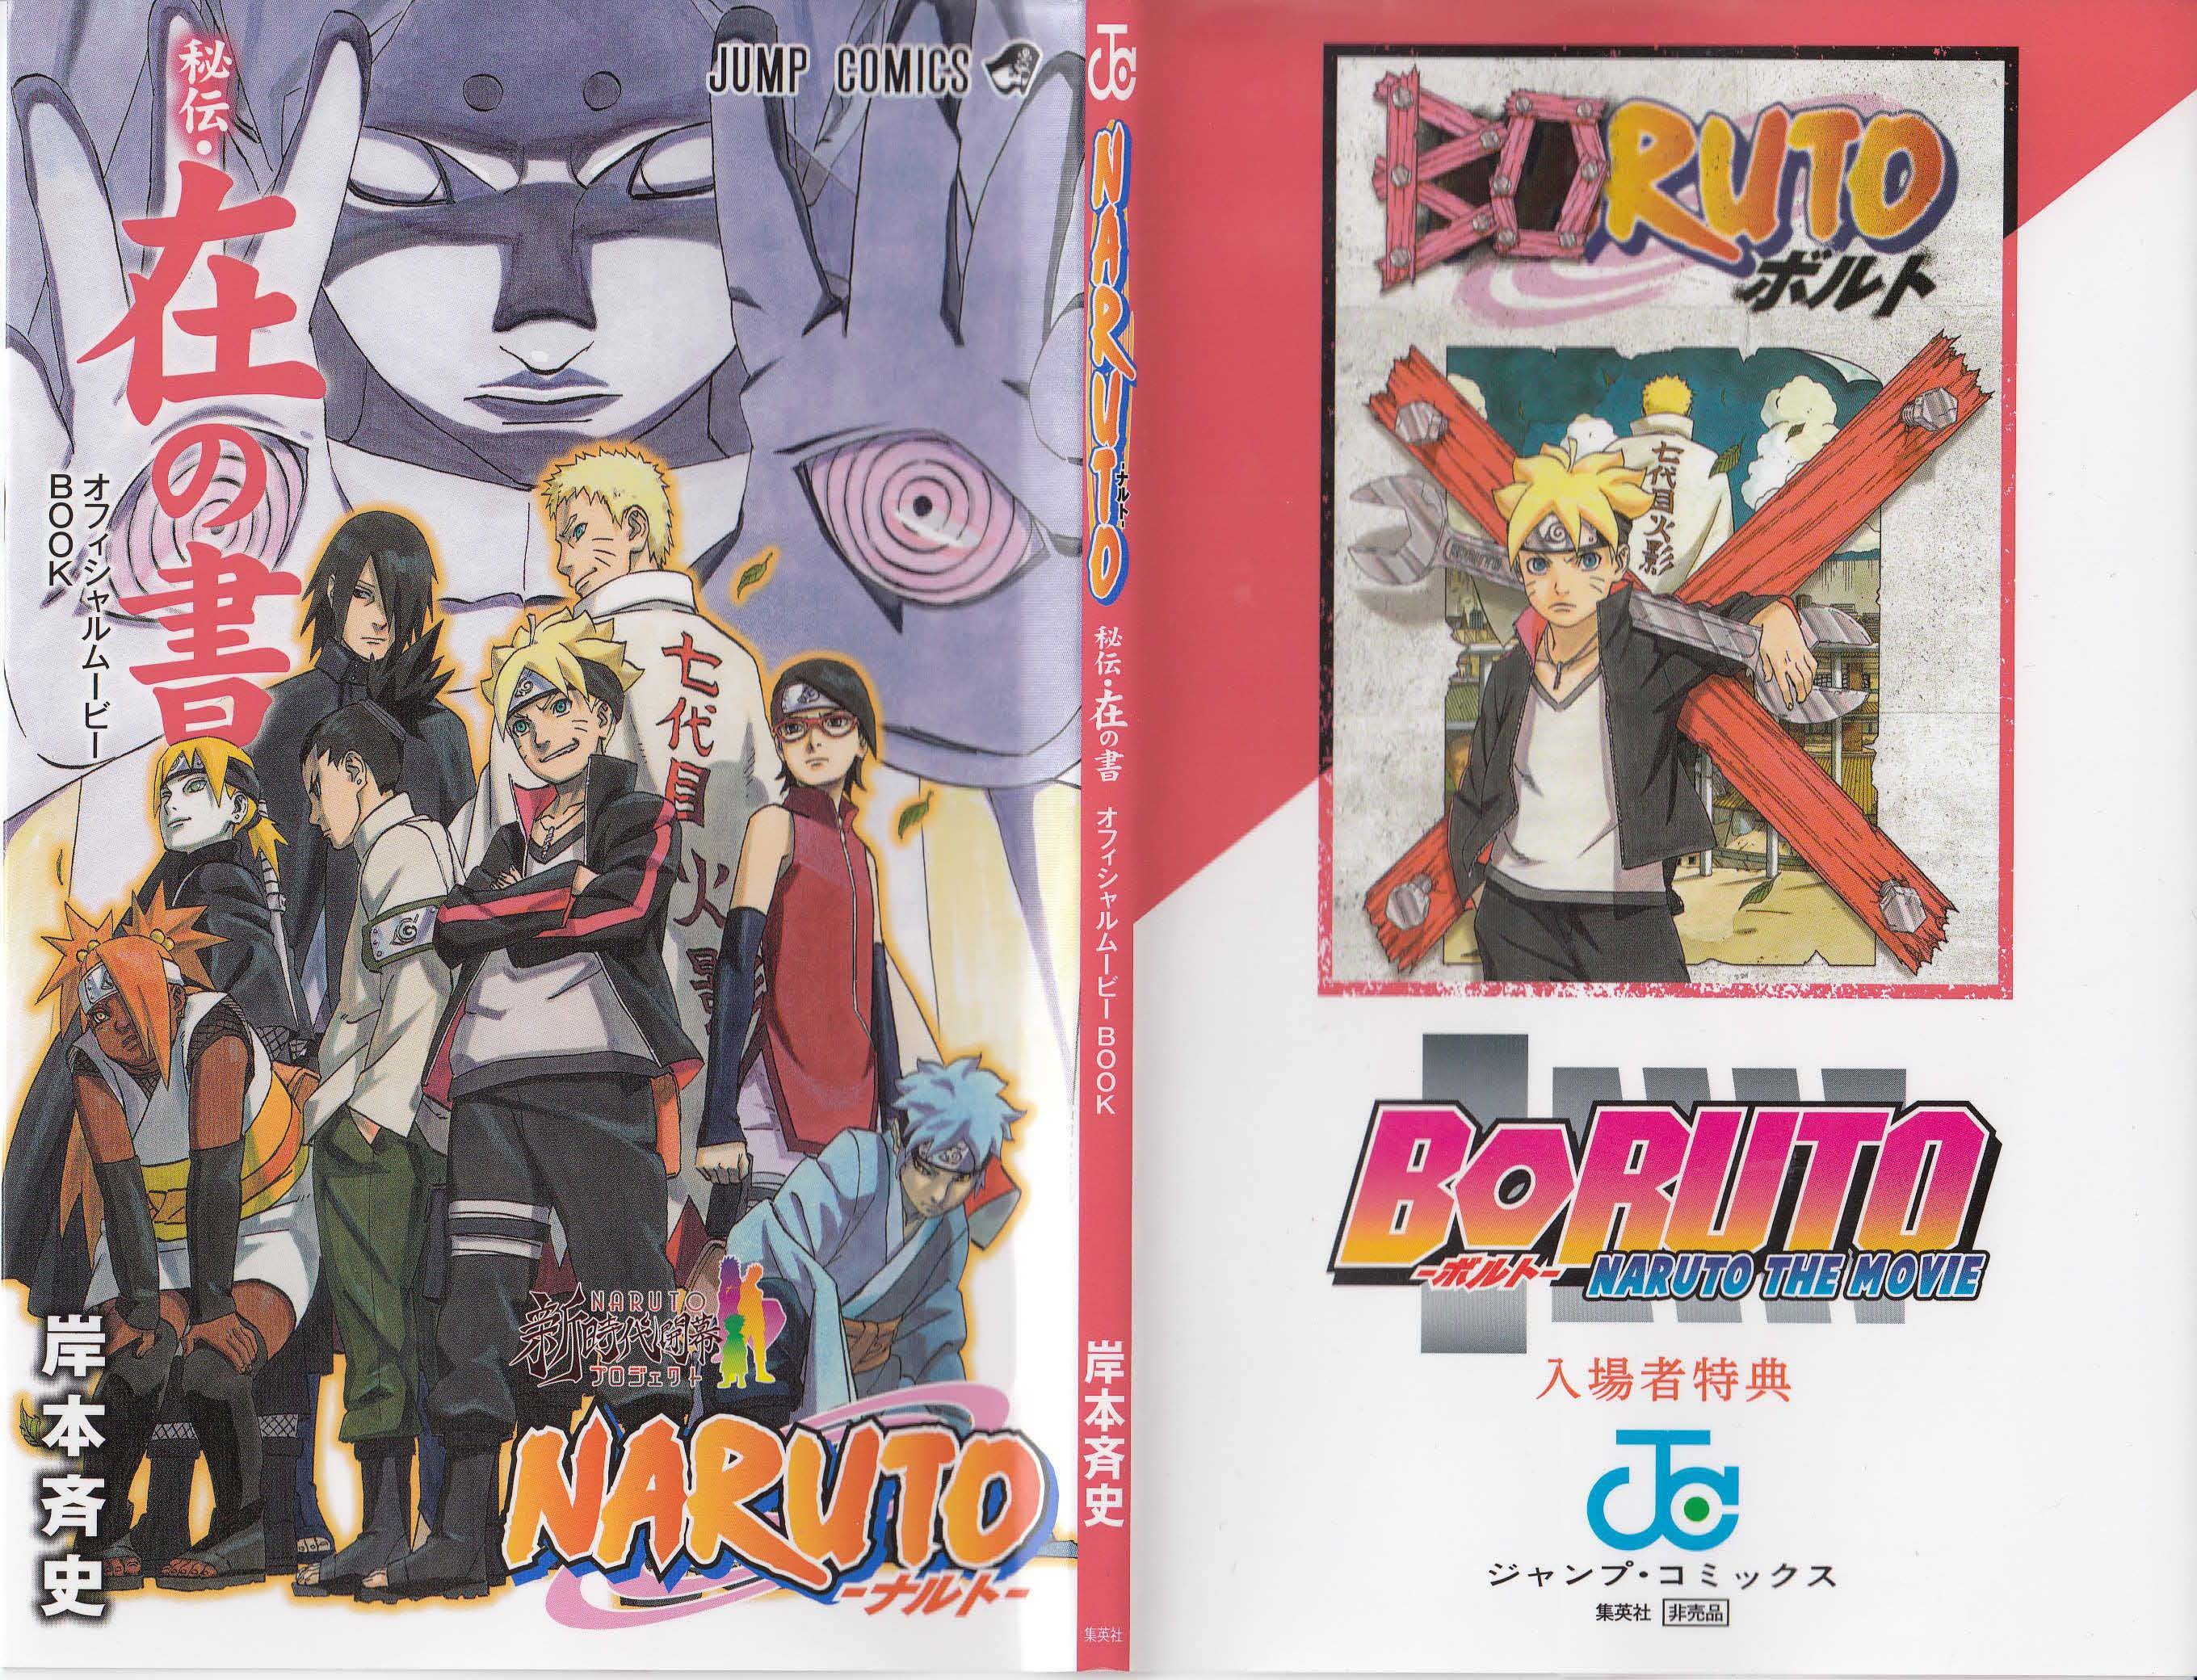 Boruto -Naruto the Movie- Plot and Report *Warning: Full movie Spoilers*